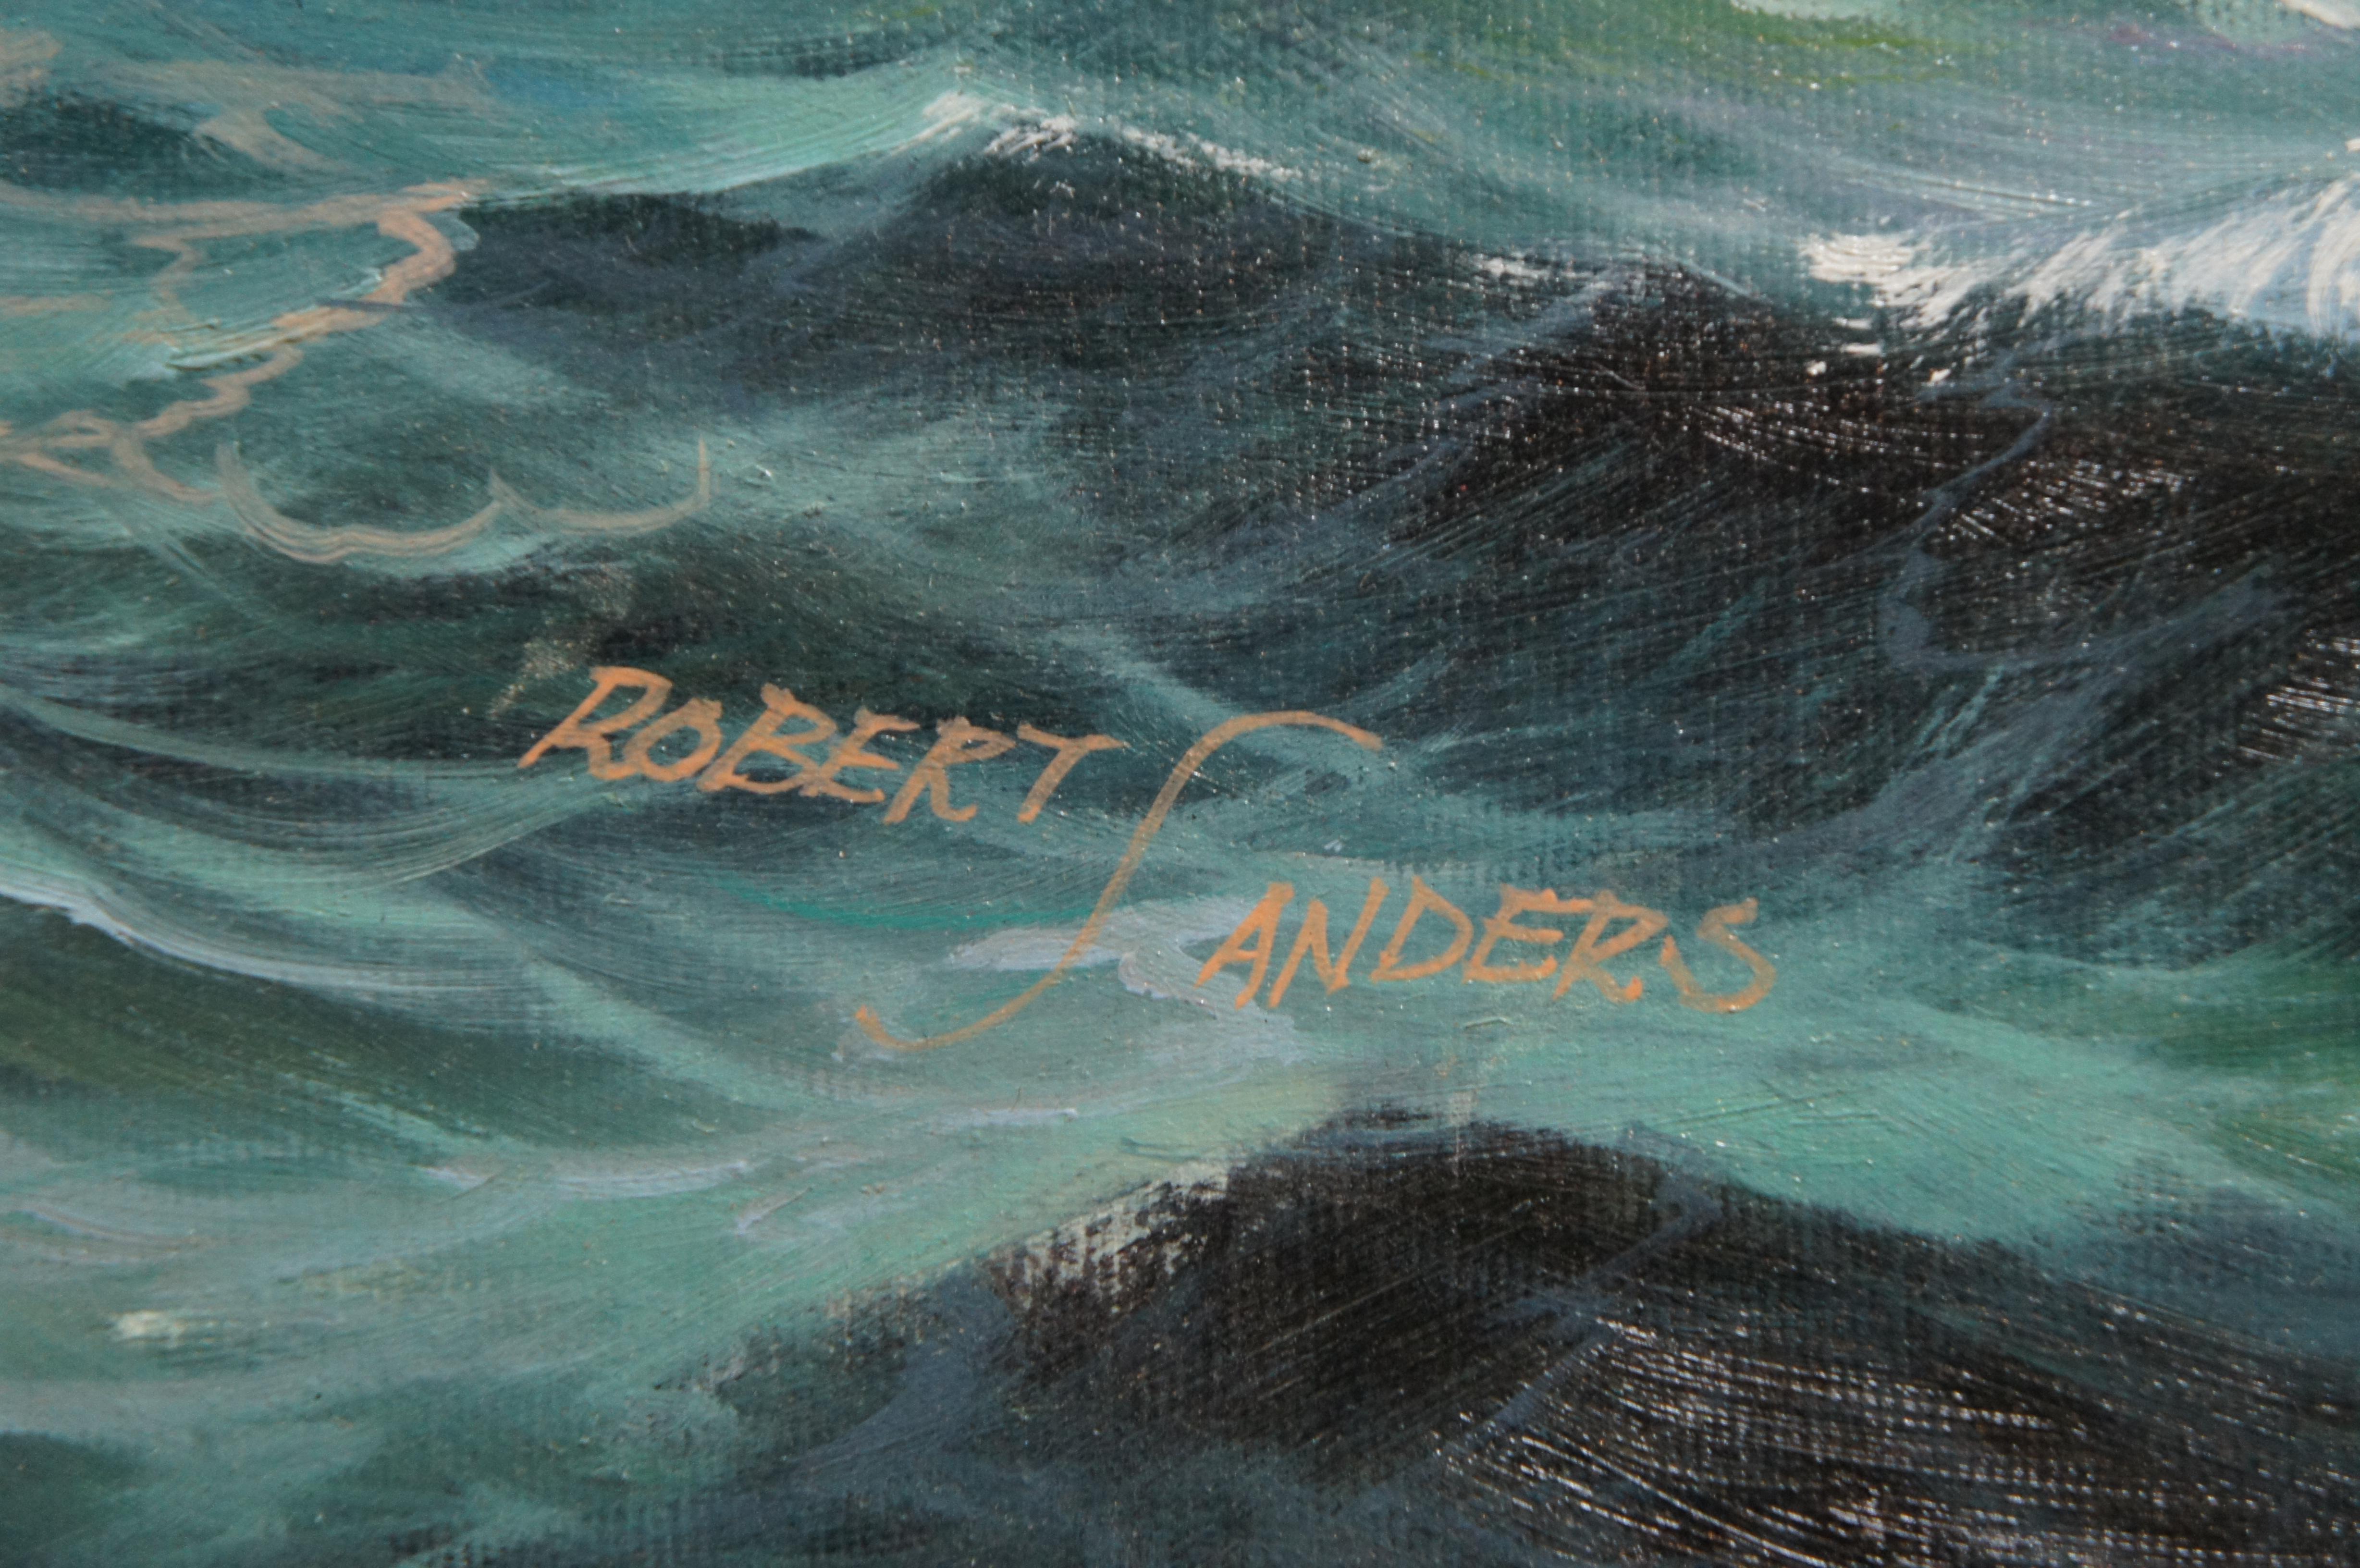 Robert Sanders American Clipper Ship Nautical Maritime Seascape Oil Painting 46